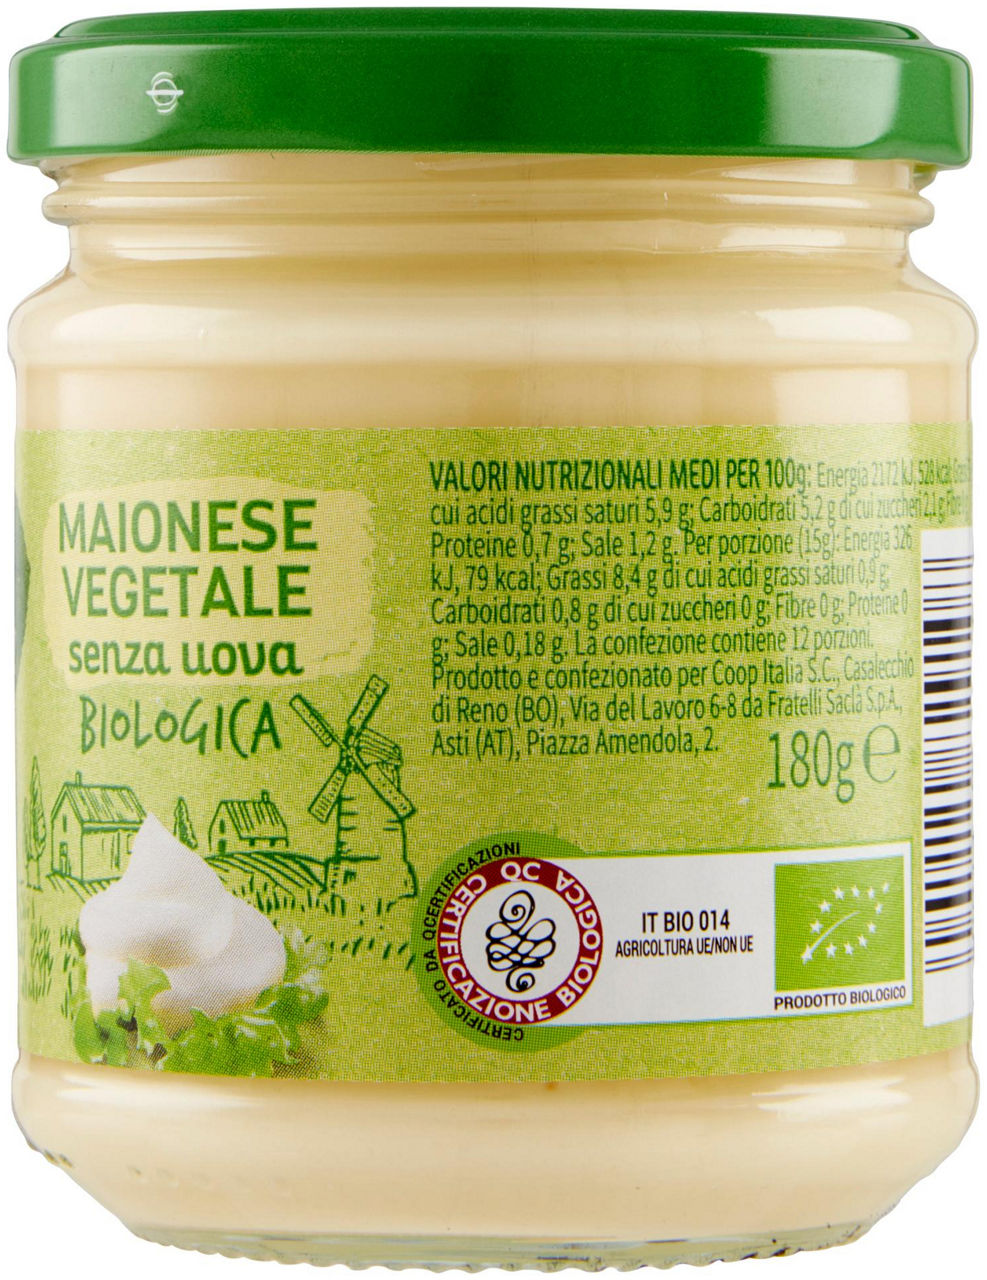 maionese senza uova Biologica Vivi Verde 180 g - 3